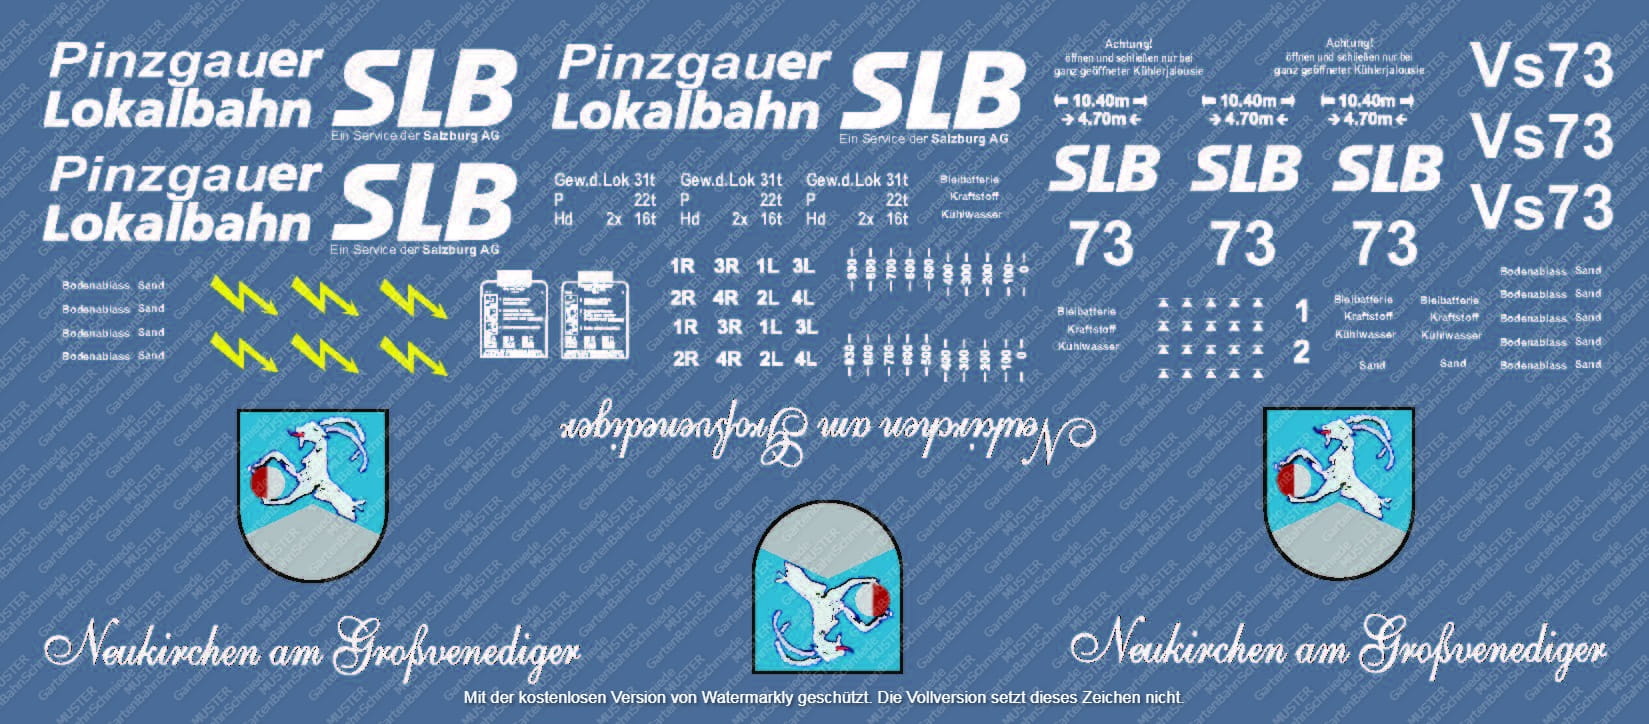 SLB Vs73 - Pinzgauer Lokalbahn